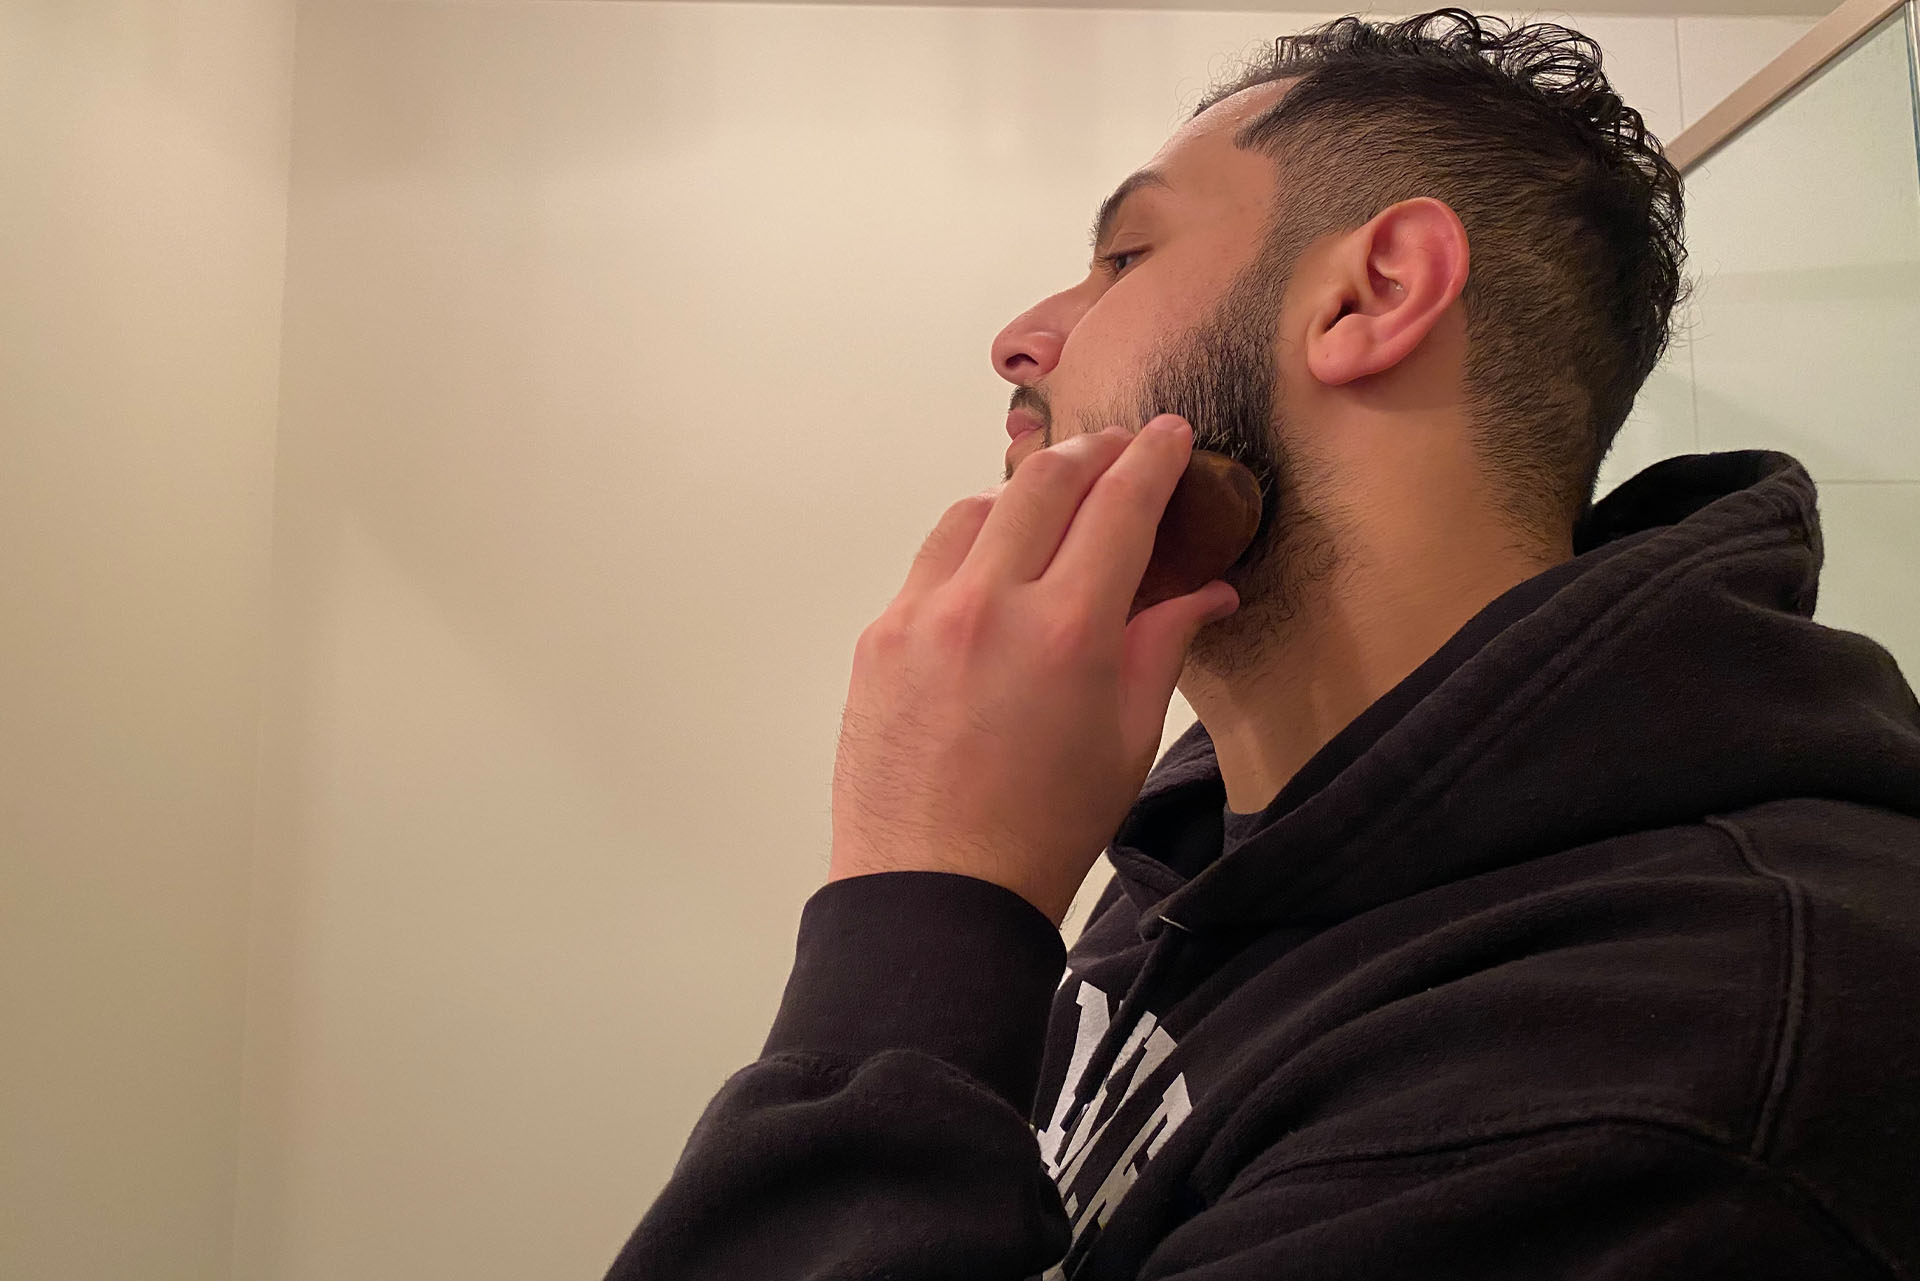 A man brushes his beard